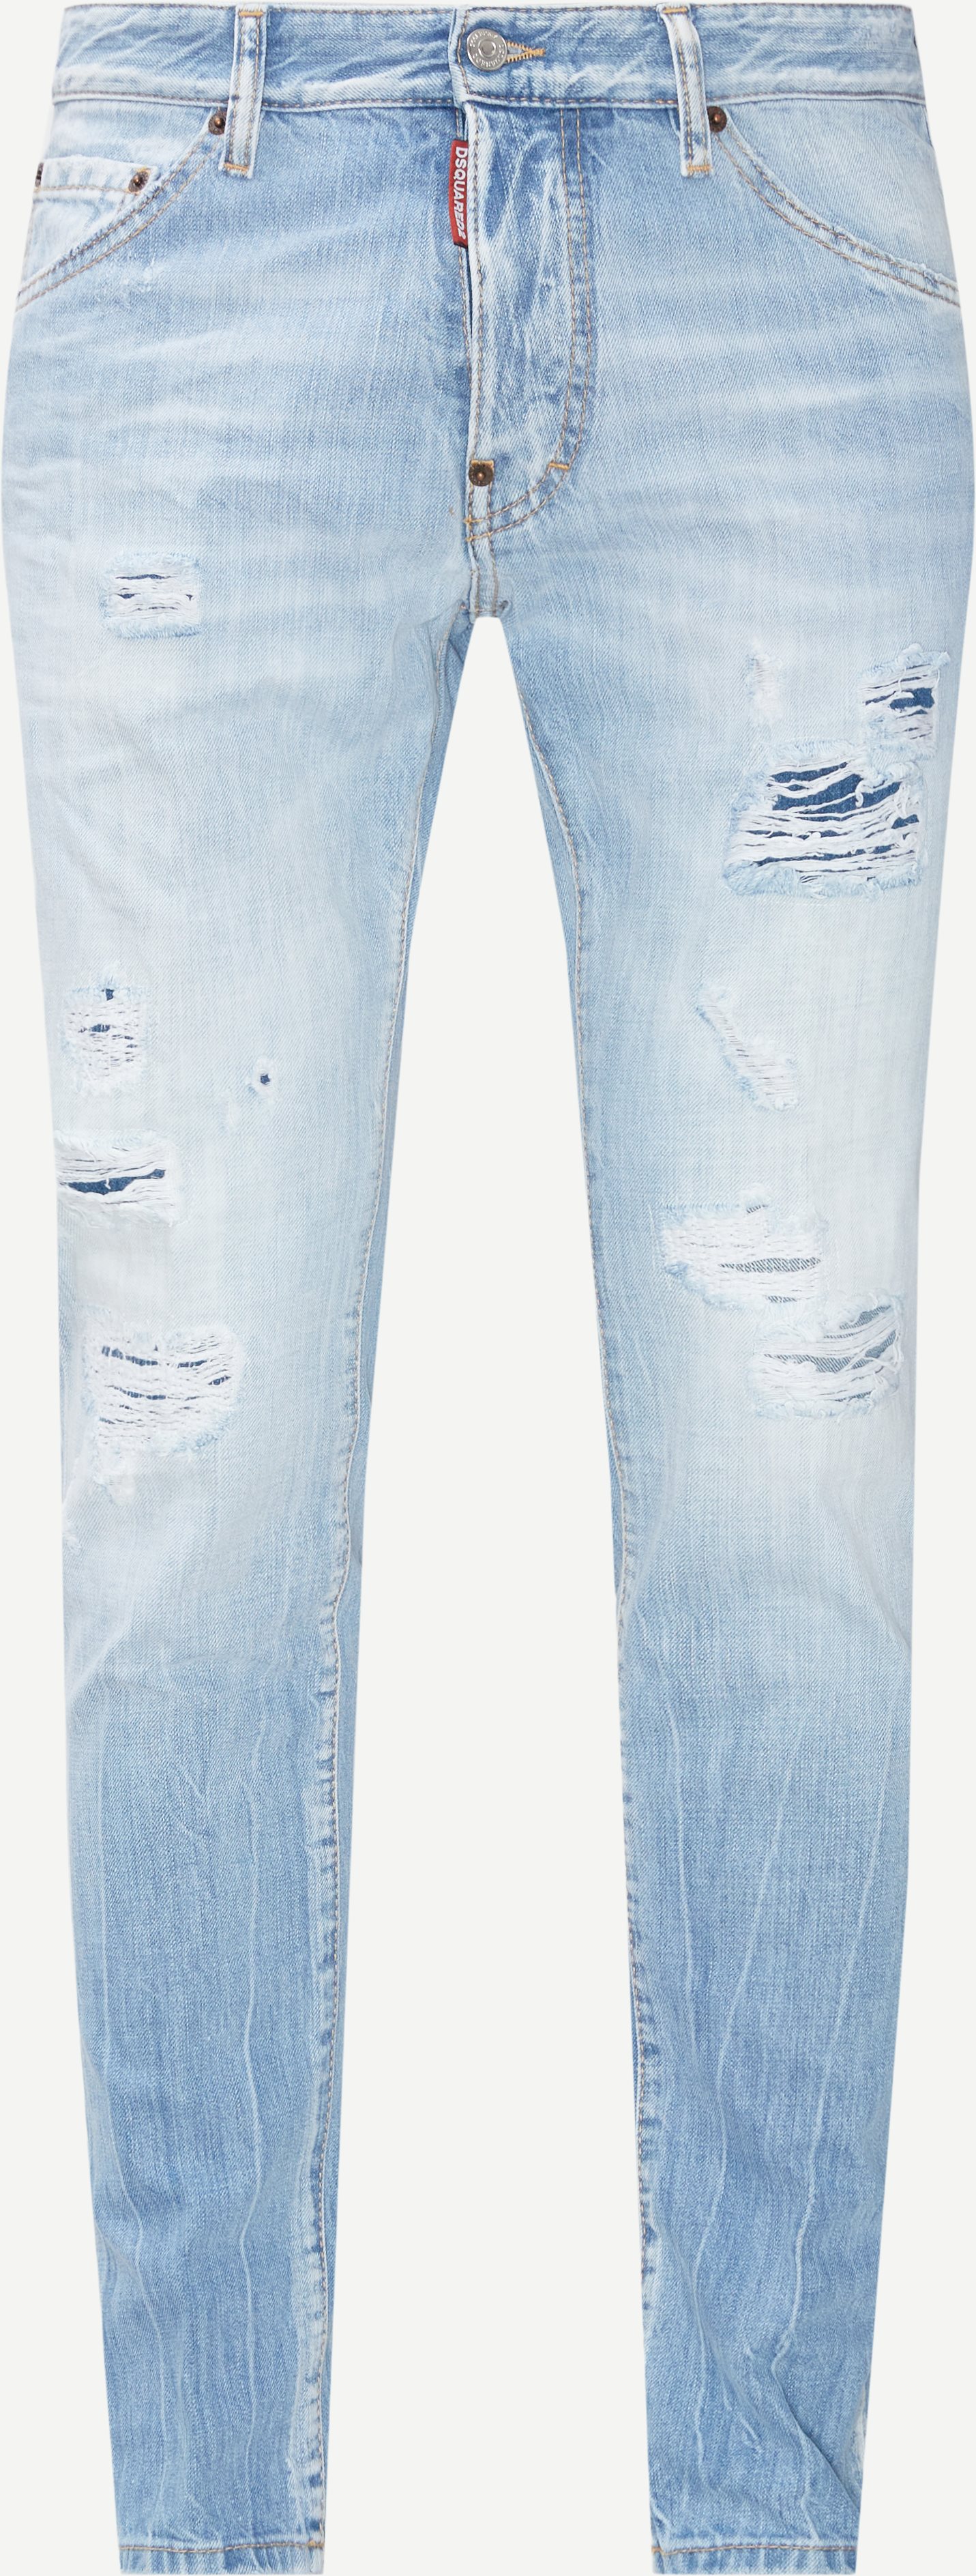 Jeans - Slim fit - Denim